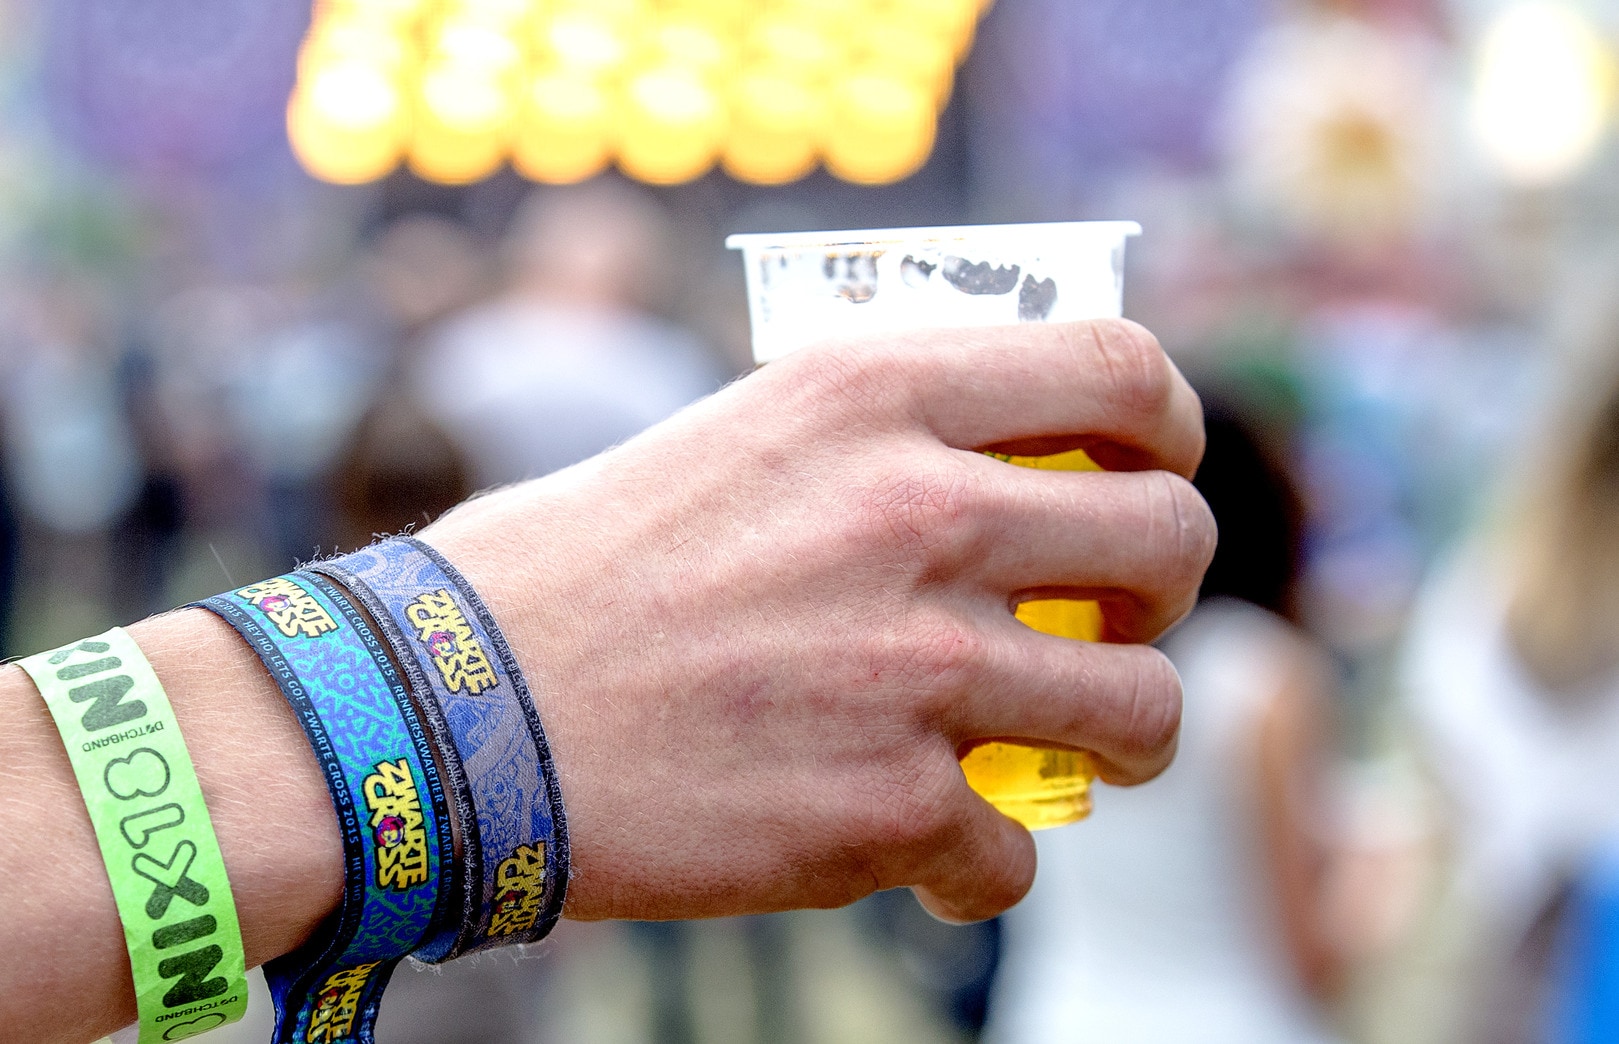 Welk bier drink je op de Amsterdamse festivals?